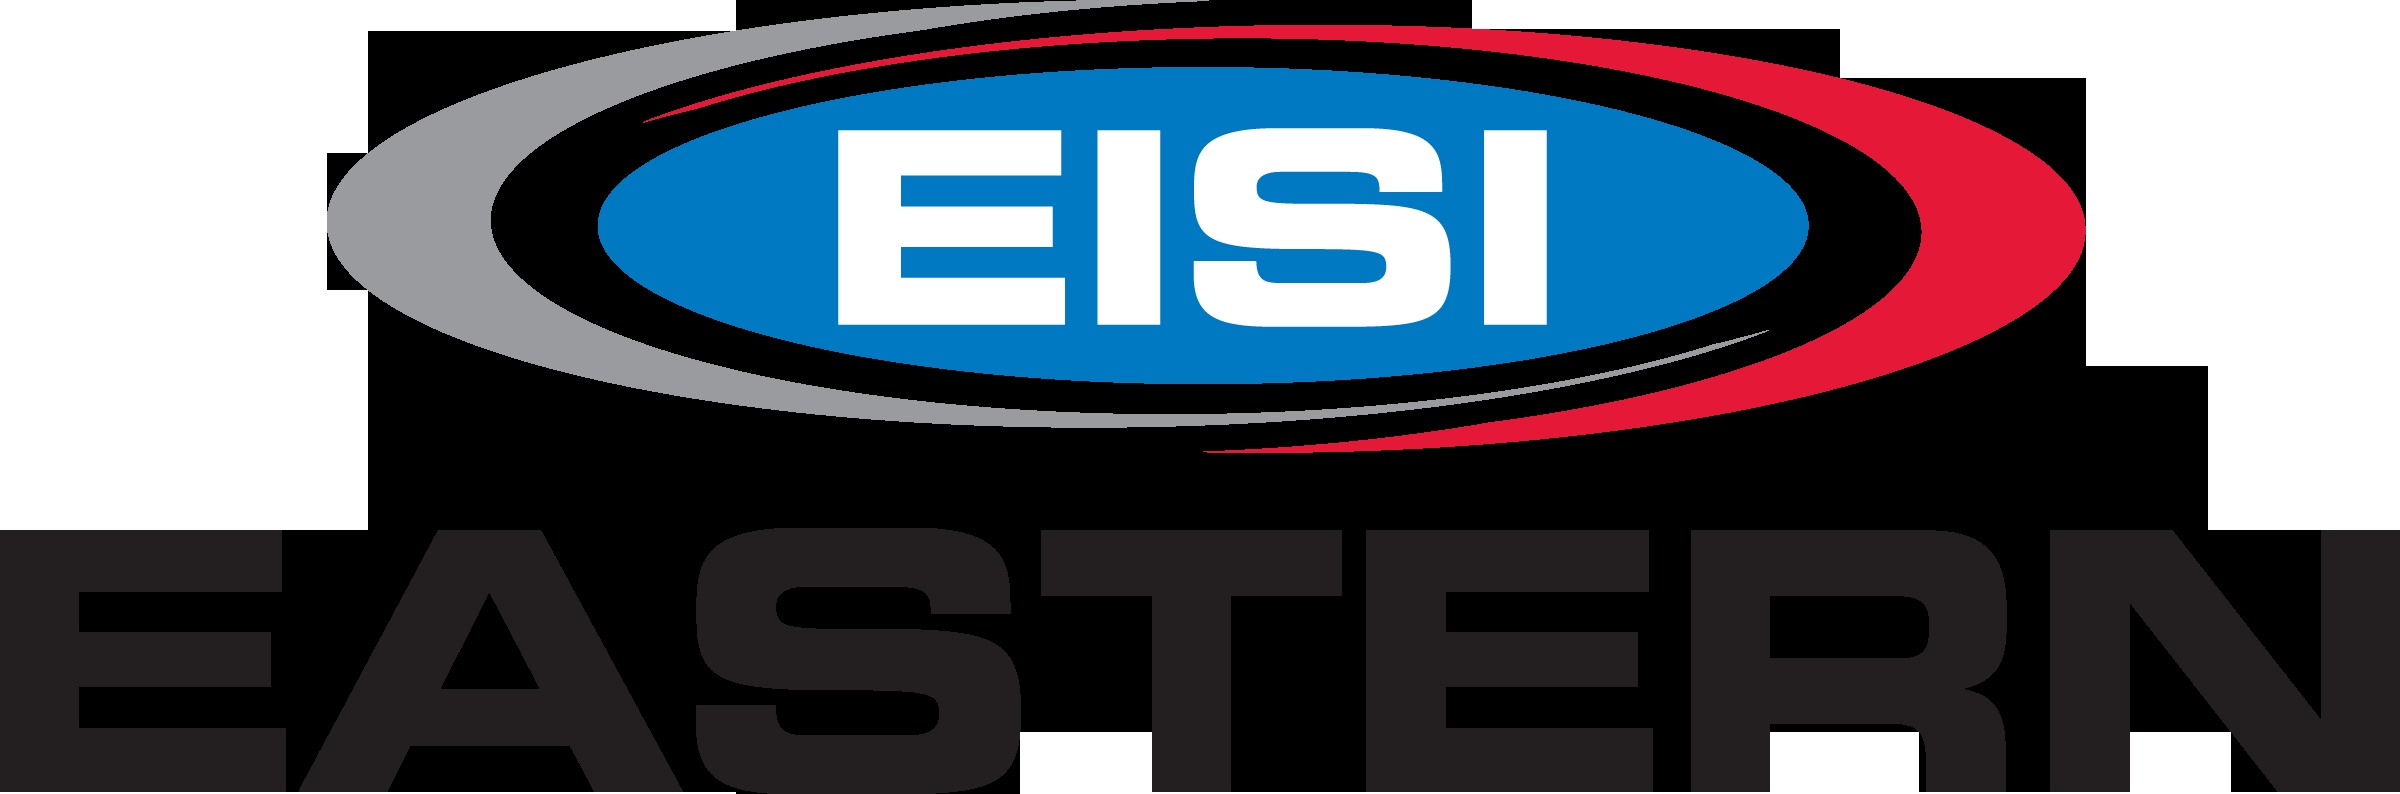 Eastern Industrial Supplies, Inc. logo